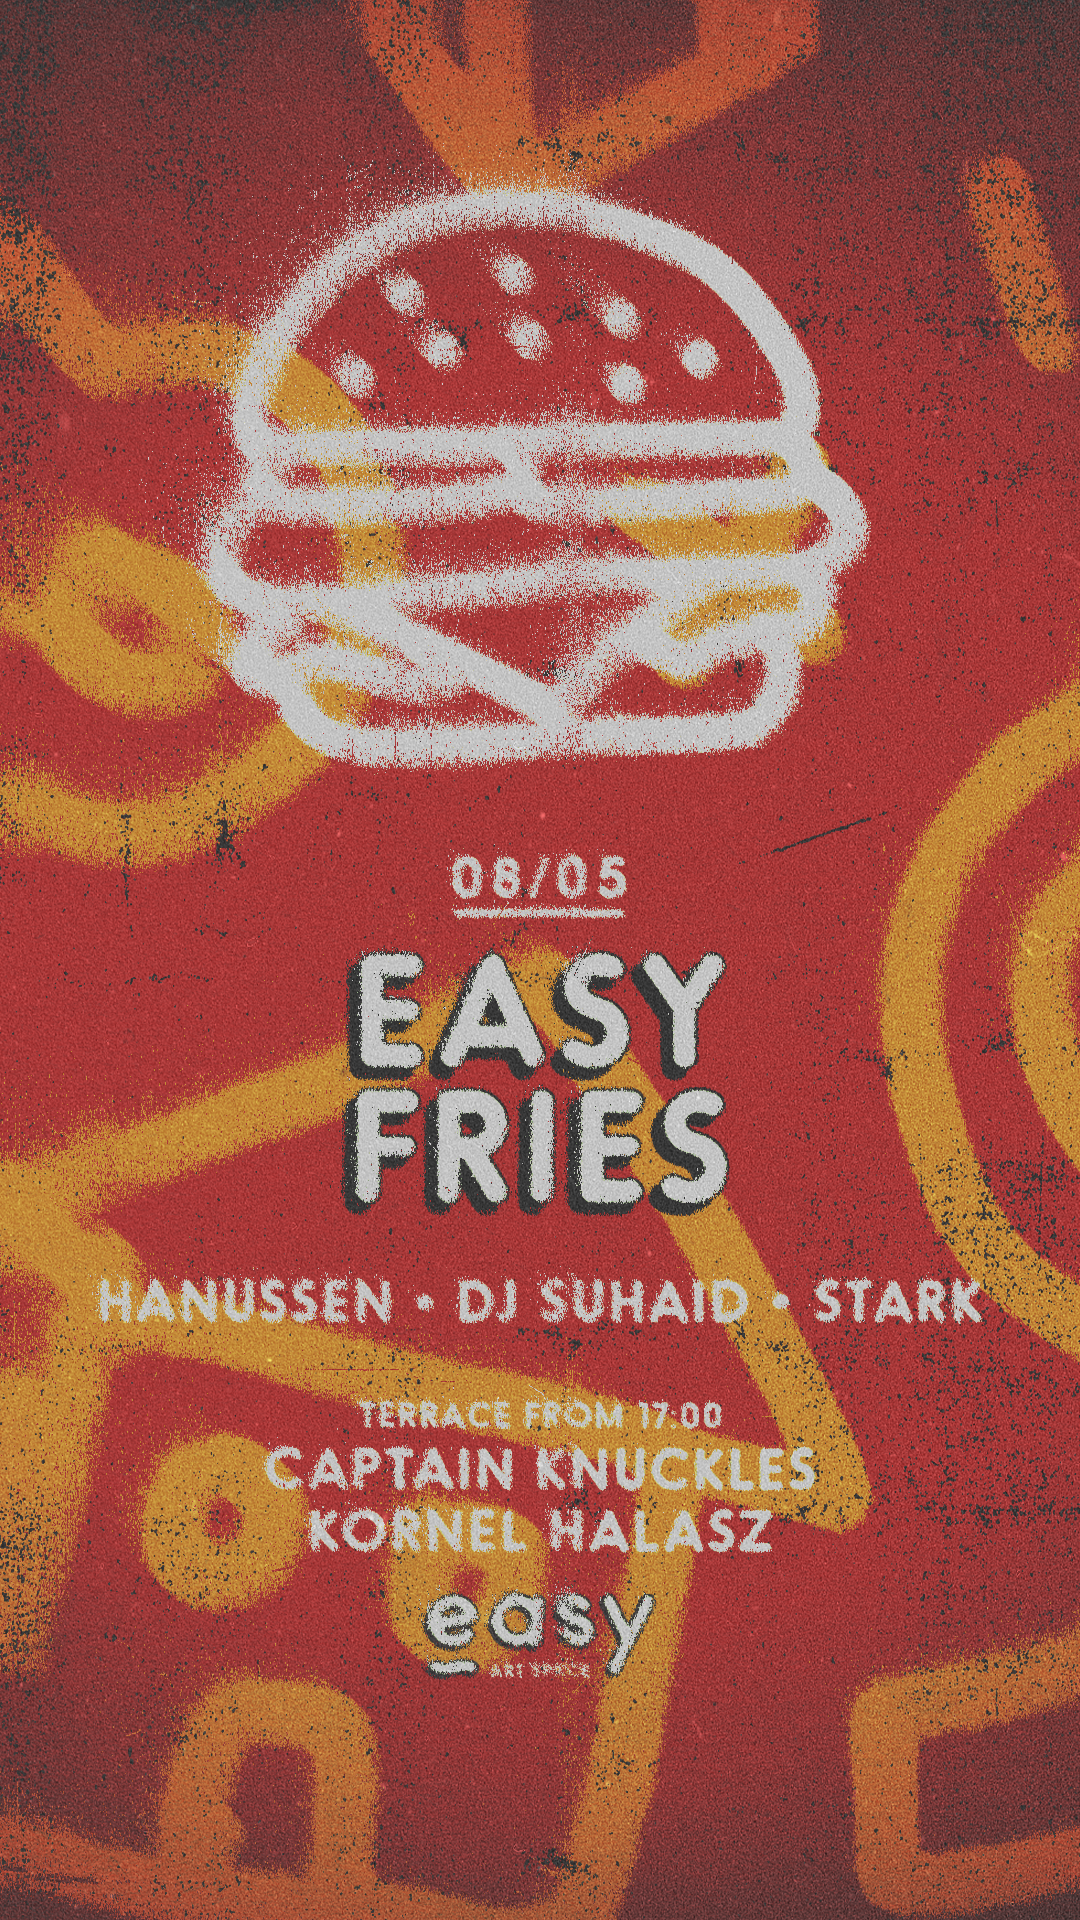 Easy Fries with Hanussen, Dj Suhaid, Stark, Captain Knuckles, Kornel Halasz - フライヤー表